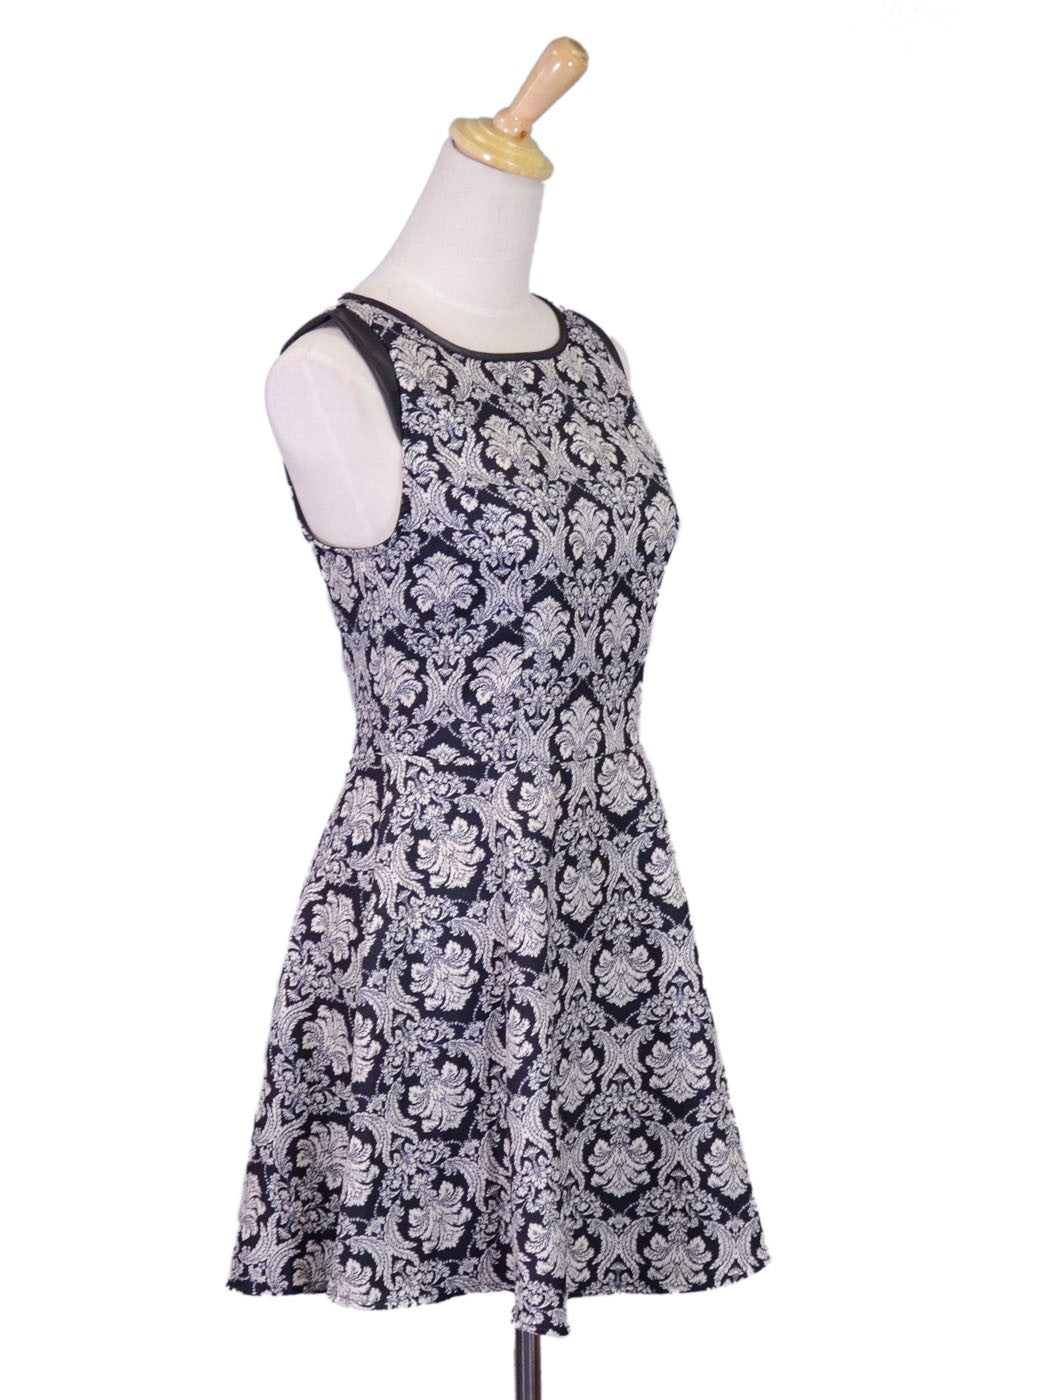 Anna-Kaci Elegant Damask Printed Woven Faux Leather Shoulder Sleeveless Dress